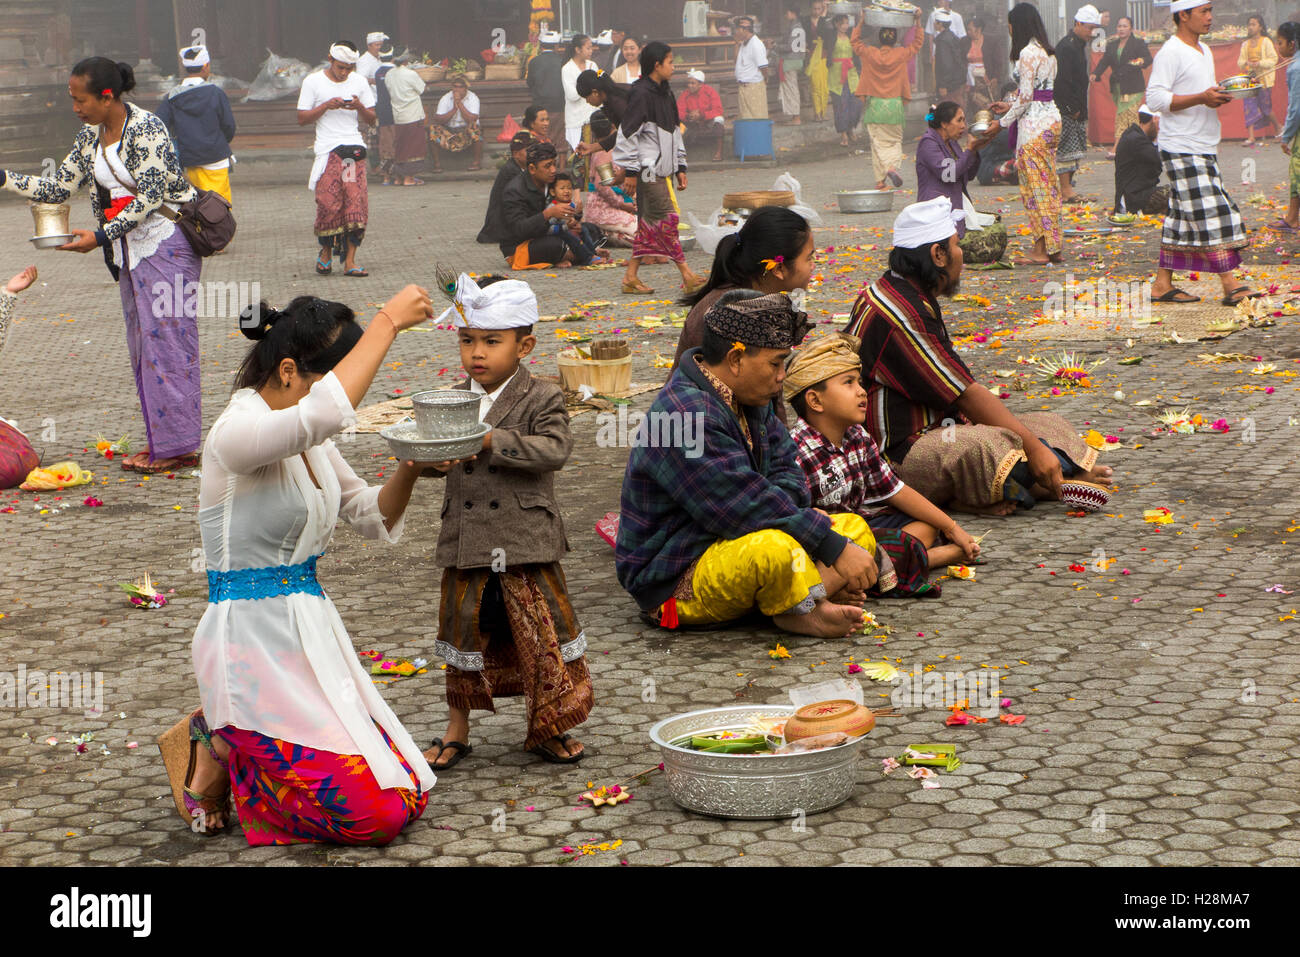 Indonesia, Bali, Batur, Pura Ulun Danu Batur, Kuningan festival worshippers praying, sprinkling holy water Stock Photo